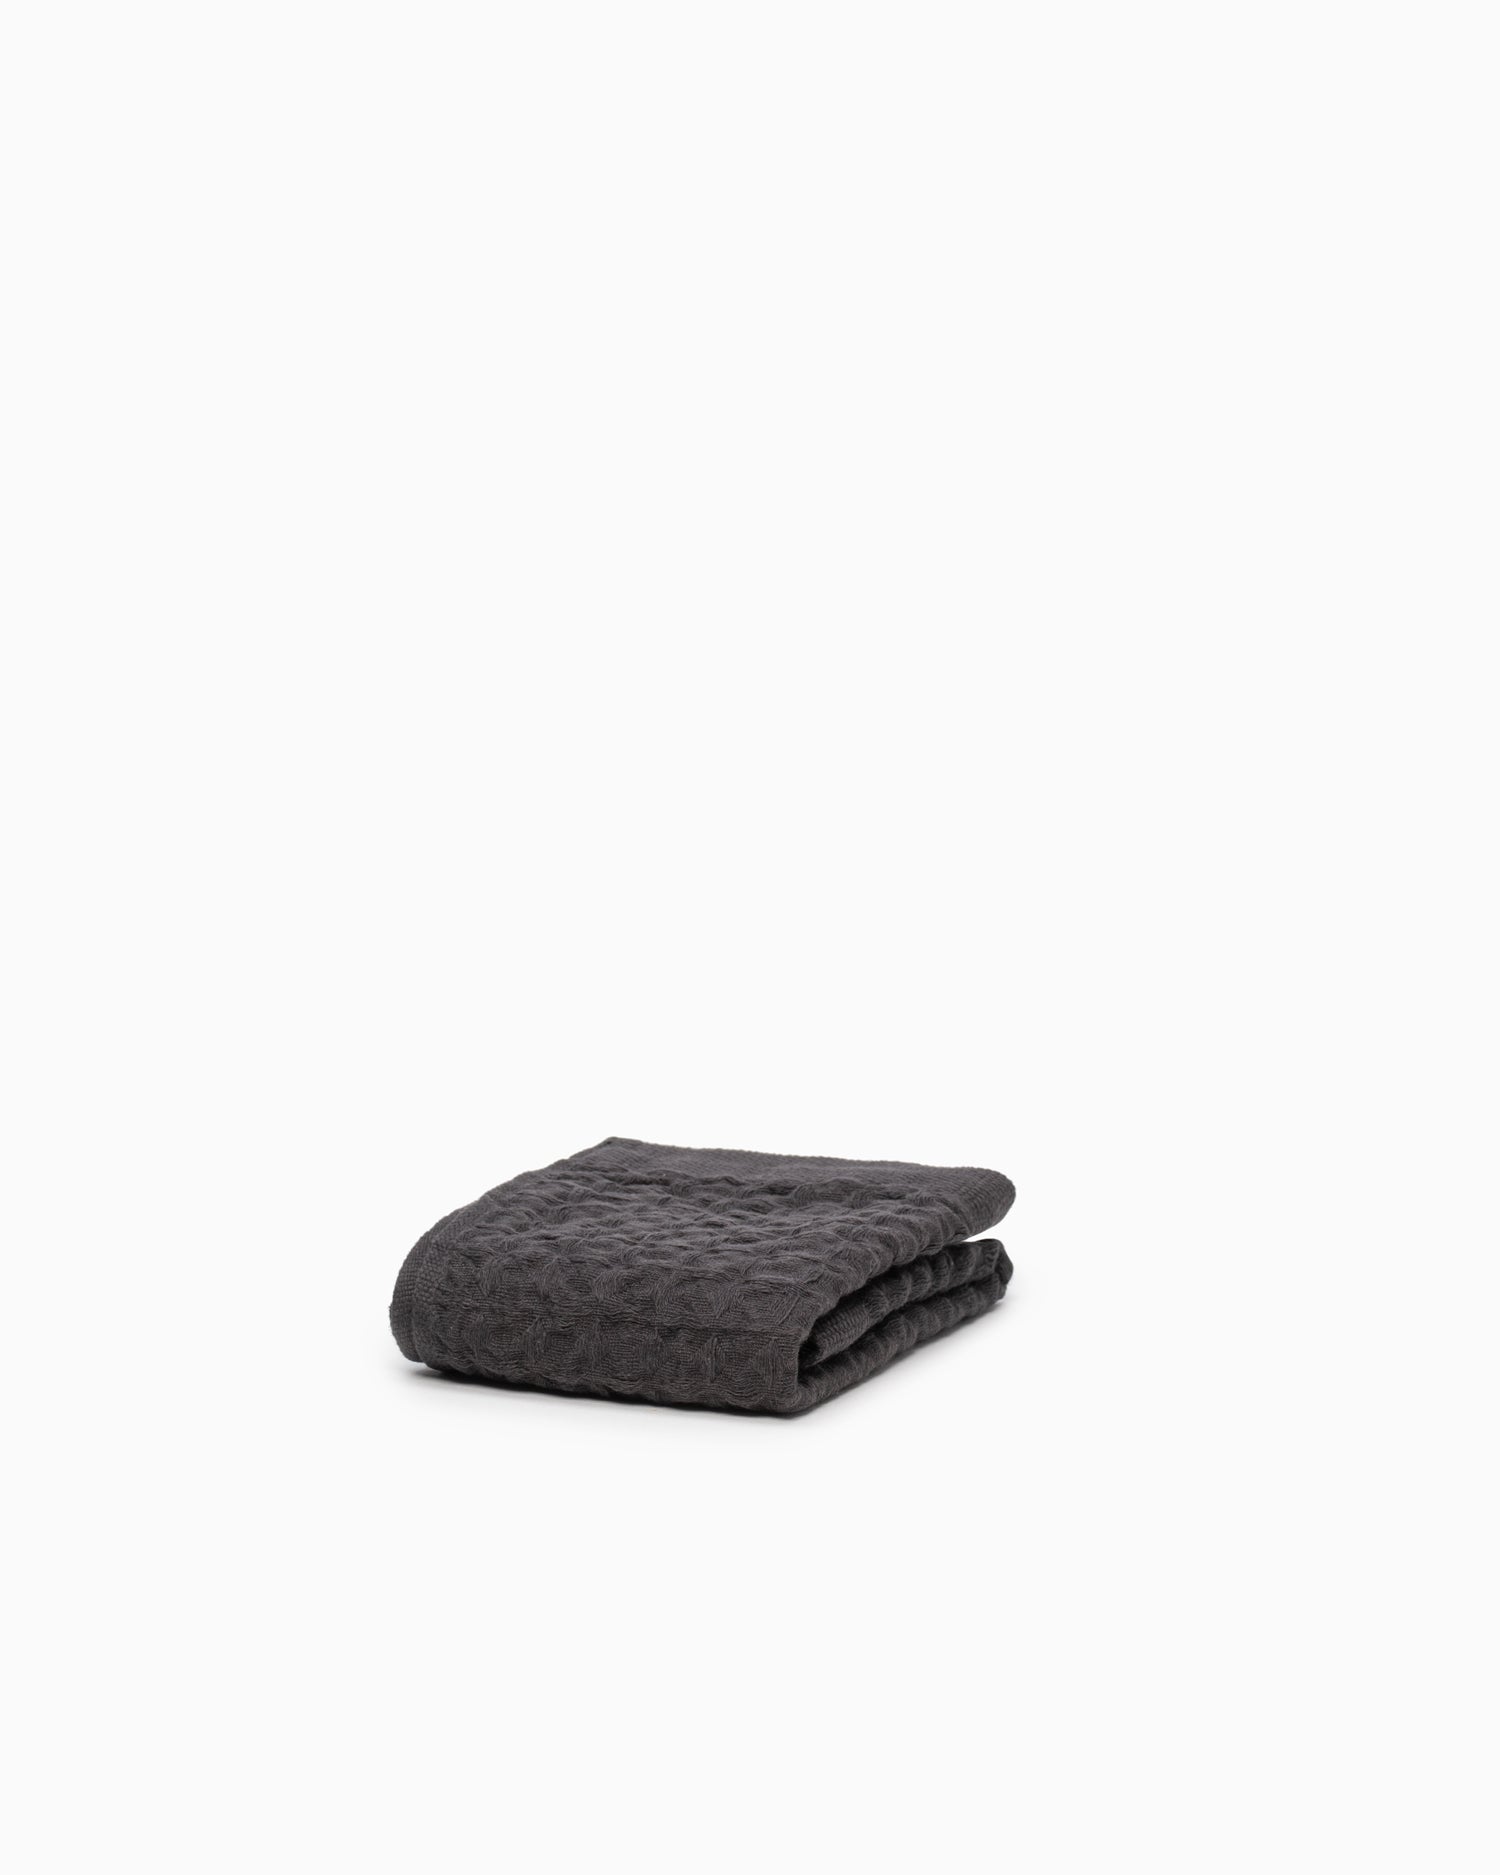 Lattice Linen Washcloth - Charcoal